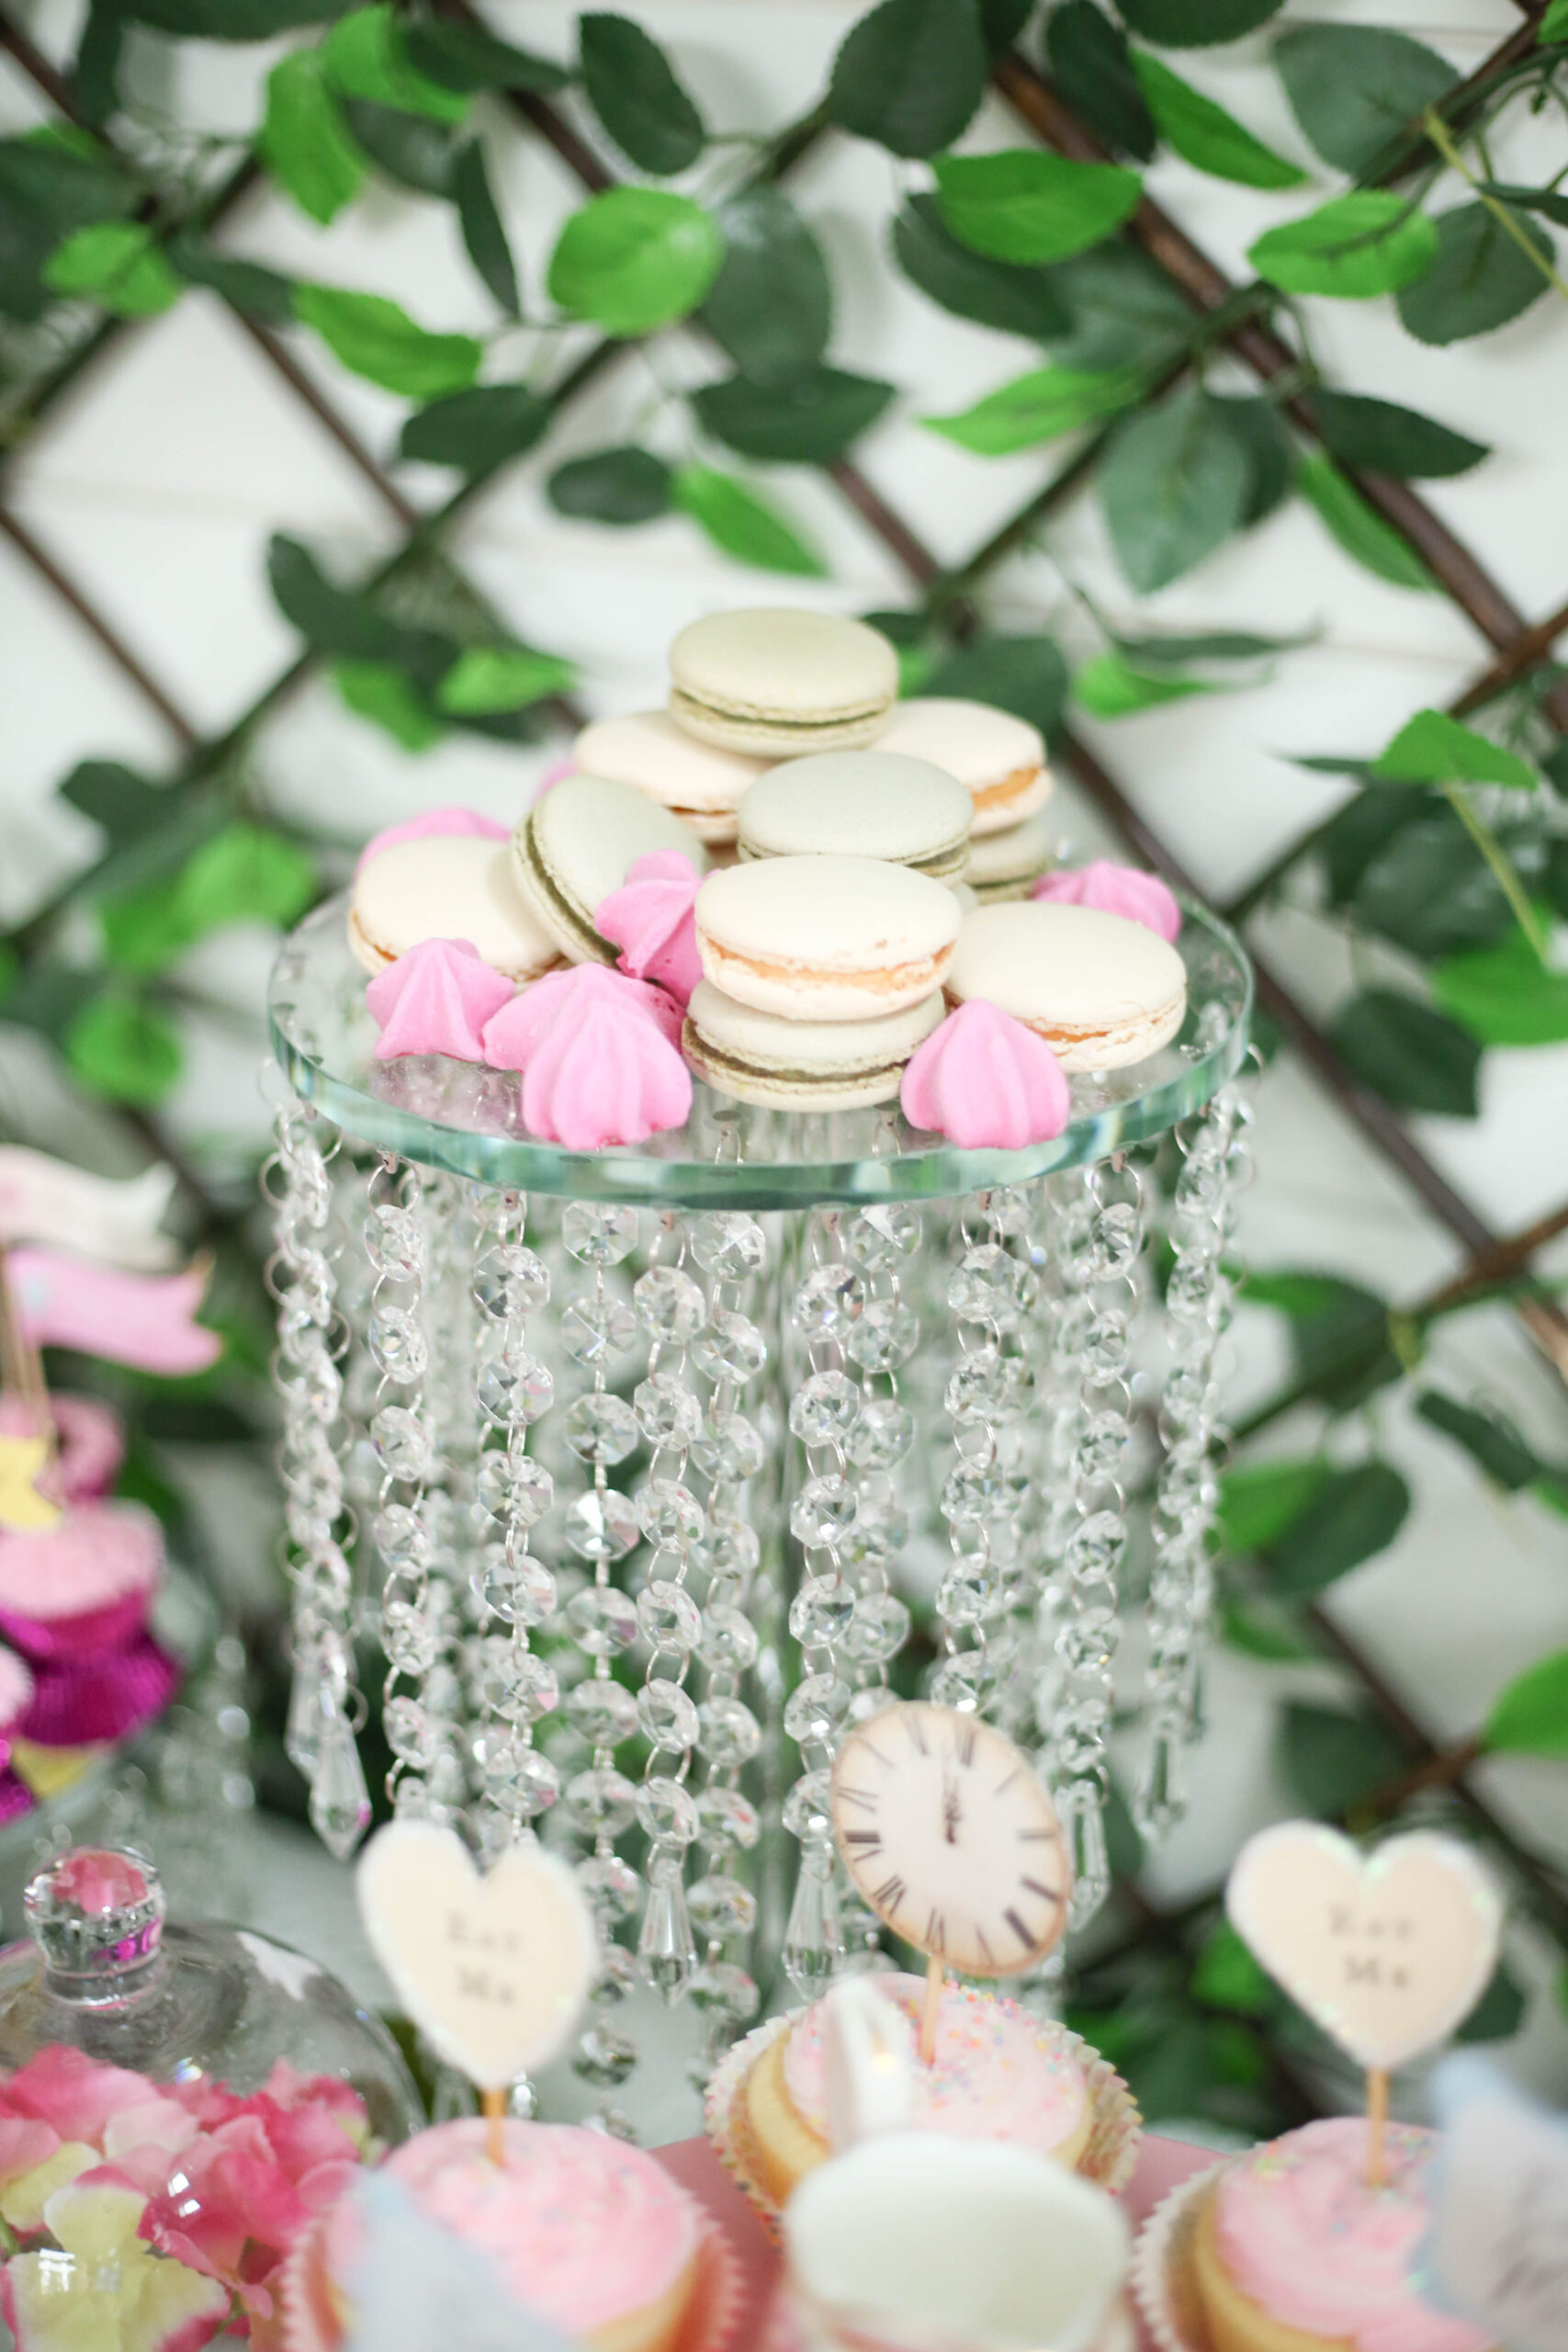 crystal cake stand with macarons